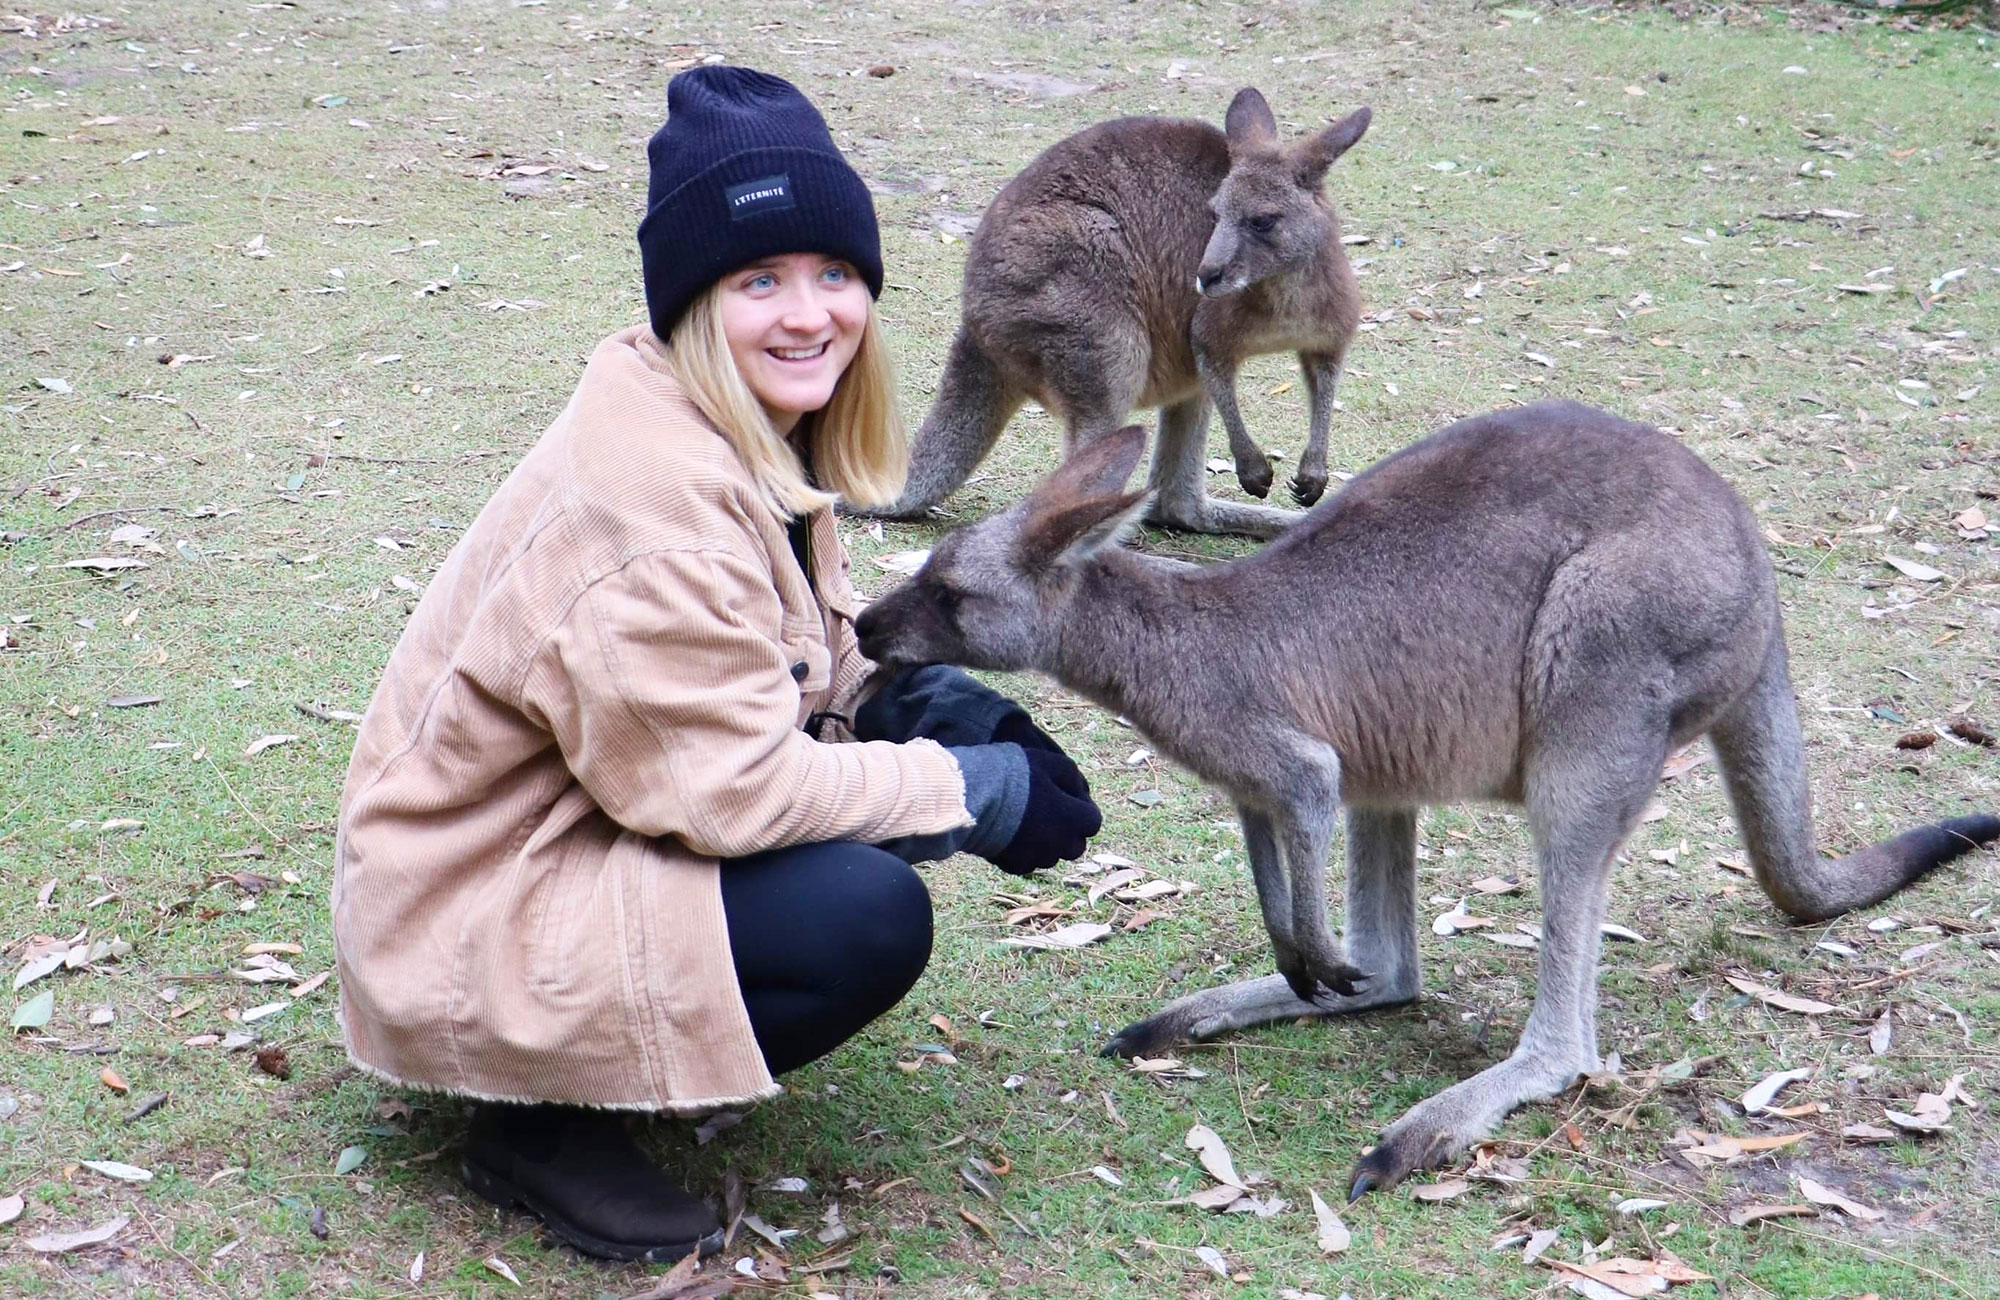 malin at uts in Sydney feeding kangaroos